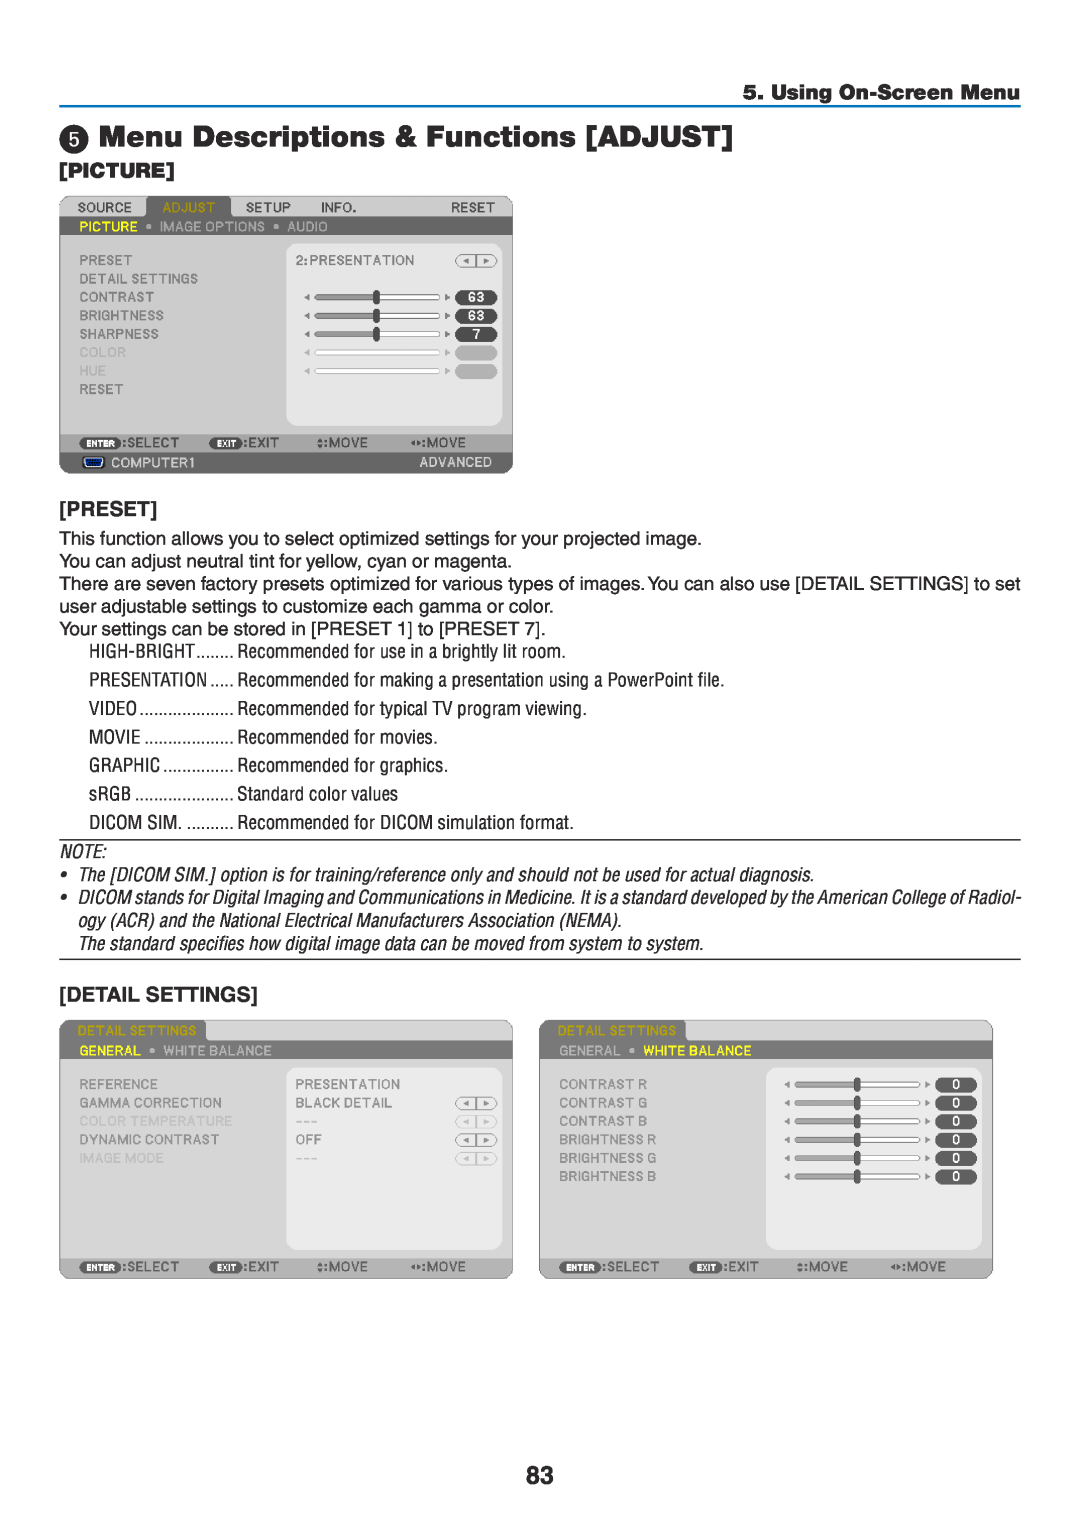 NEC NP-P350W, NP-P420X Menu Descriptions & Functions ADJUST, Picture, Preset, Detail Settings, Using On-Screen Menu 